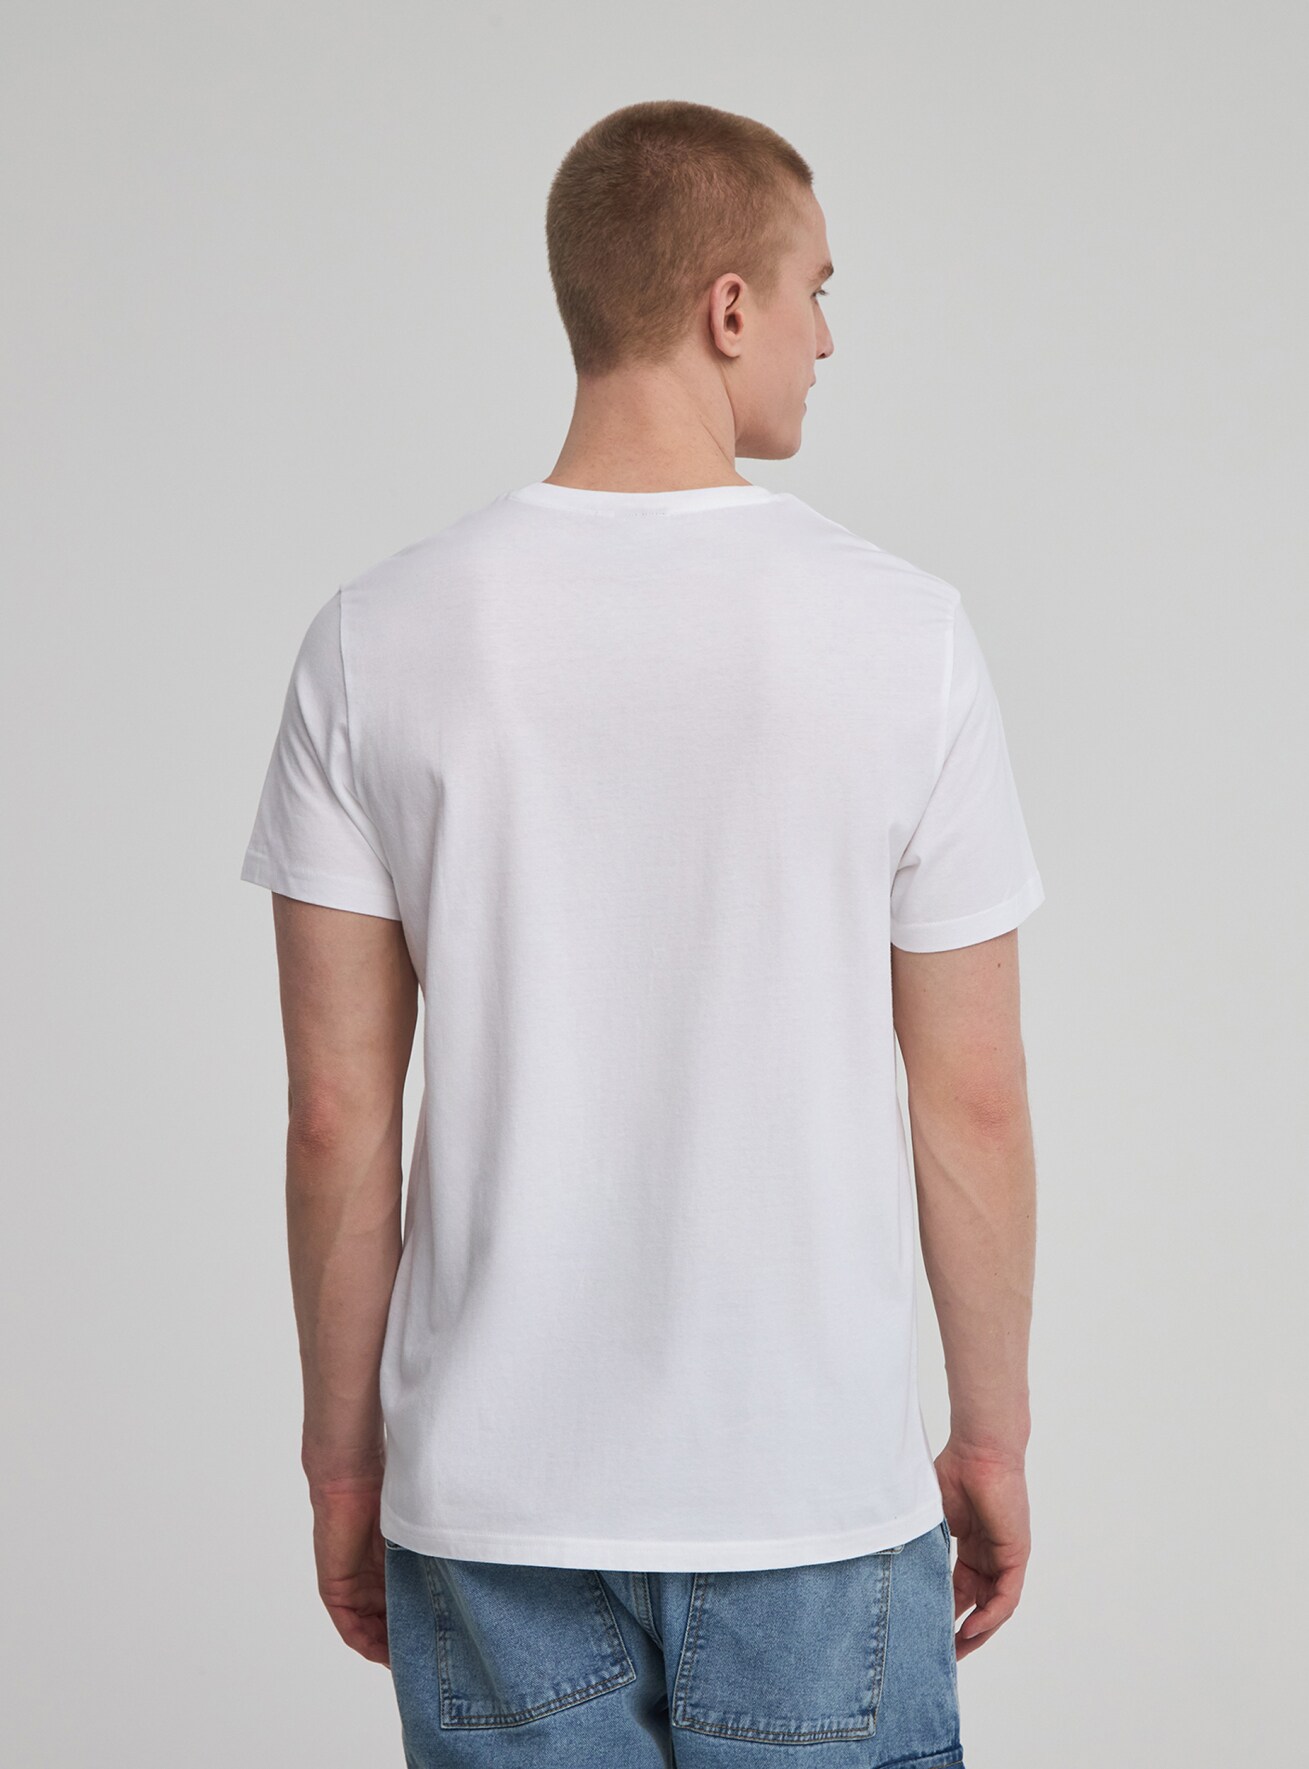 White Terpanese T-Shirt Front Print